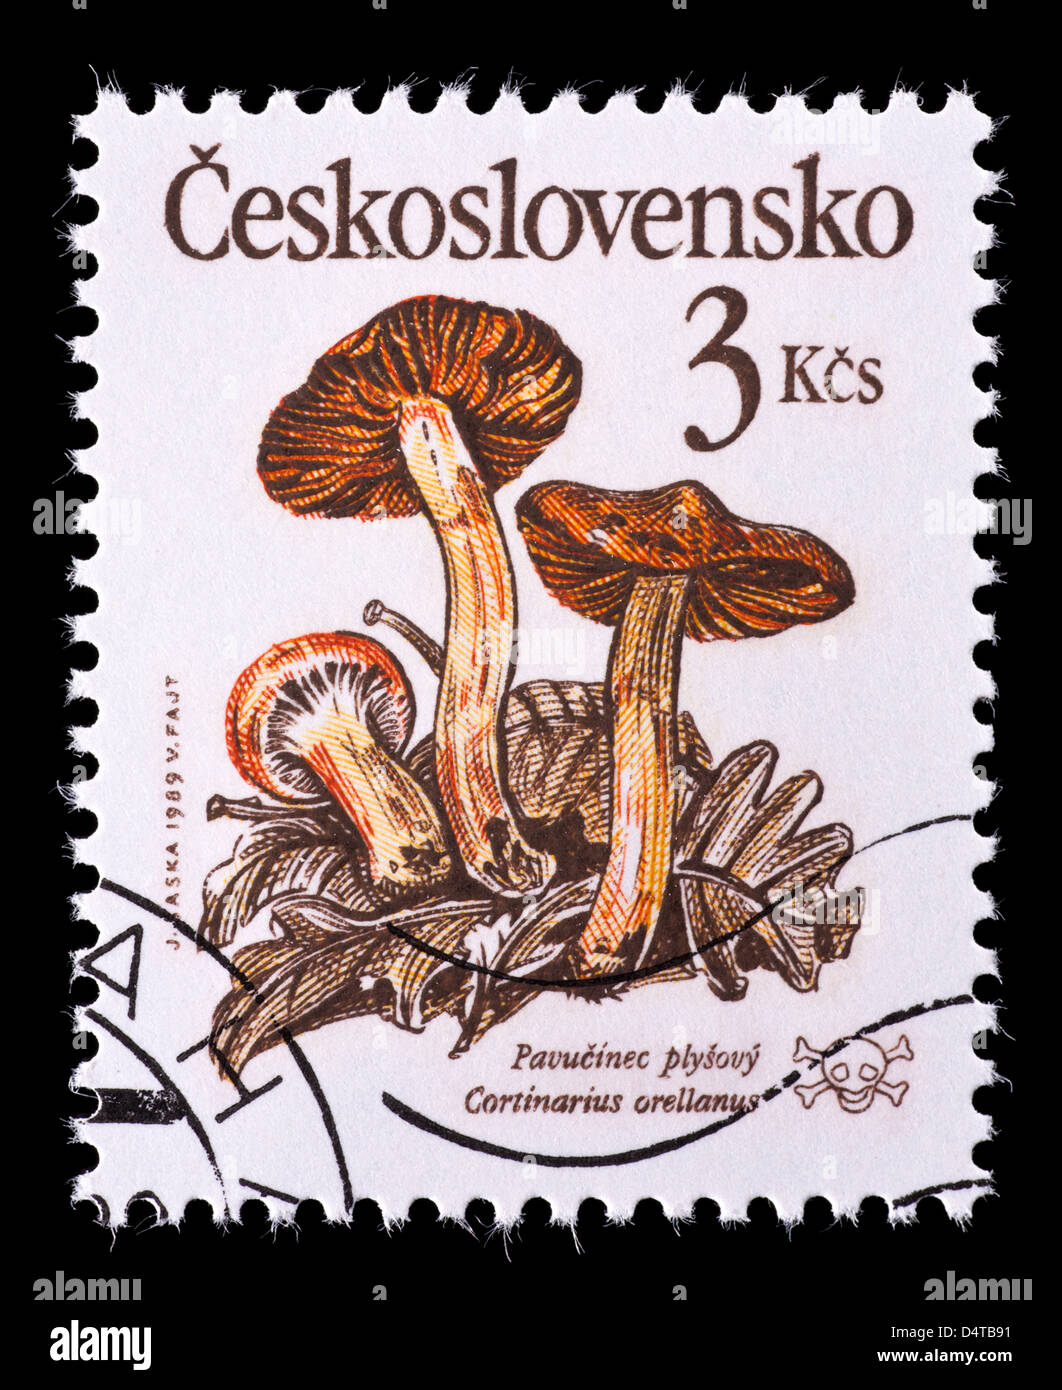 Postage stamp from Czechoslovakia depicting a Fool's webcap mushroom (Cortinarius orellanus) Stock Photo